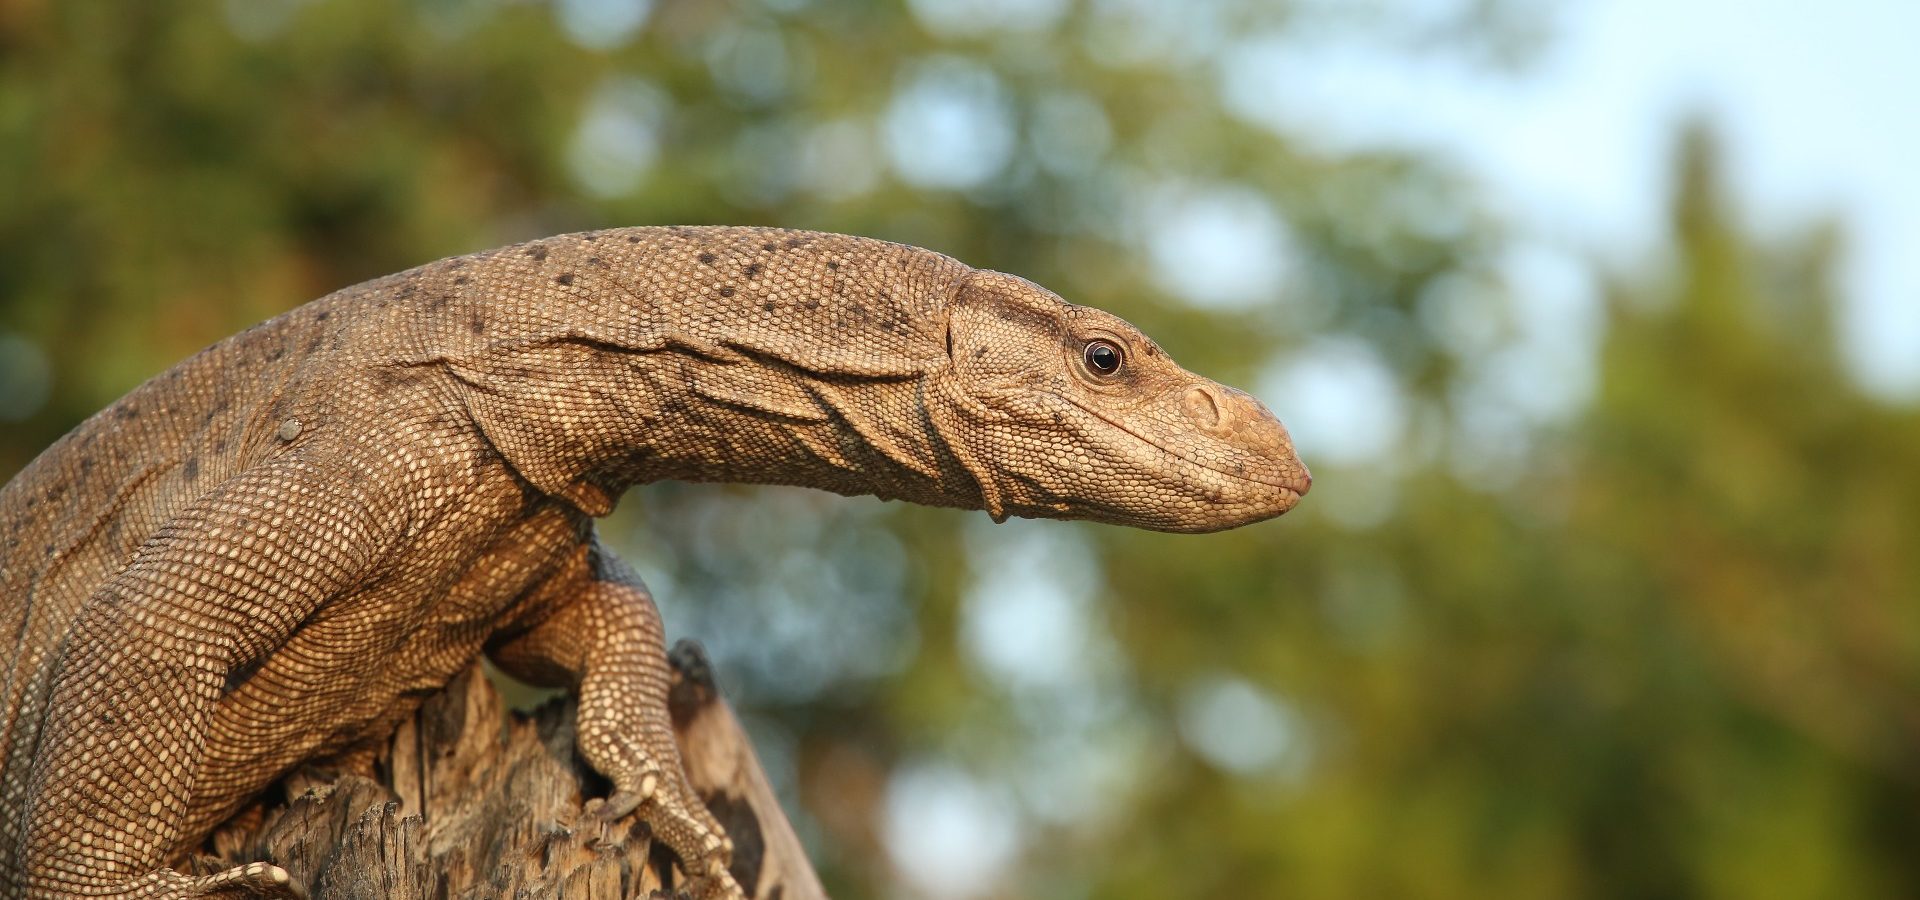 Meet The Monitor Lizards Of India - Wildlife SOS